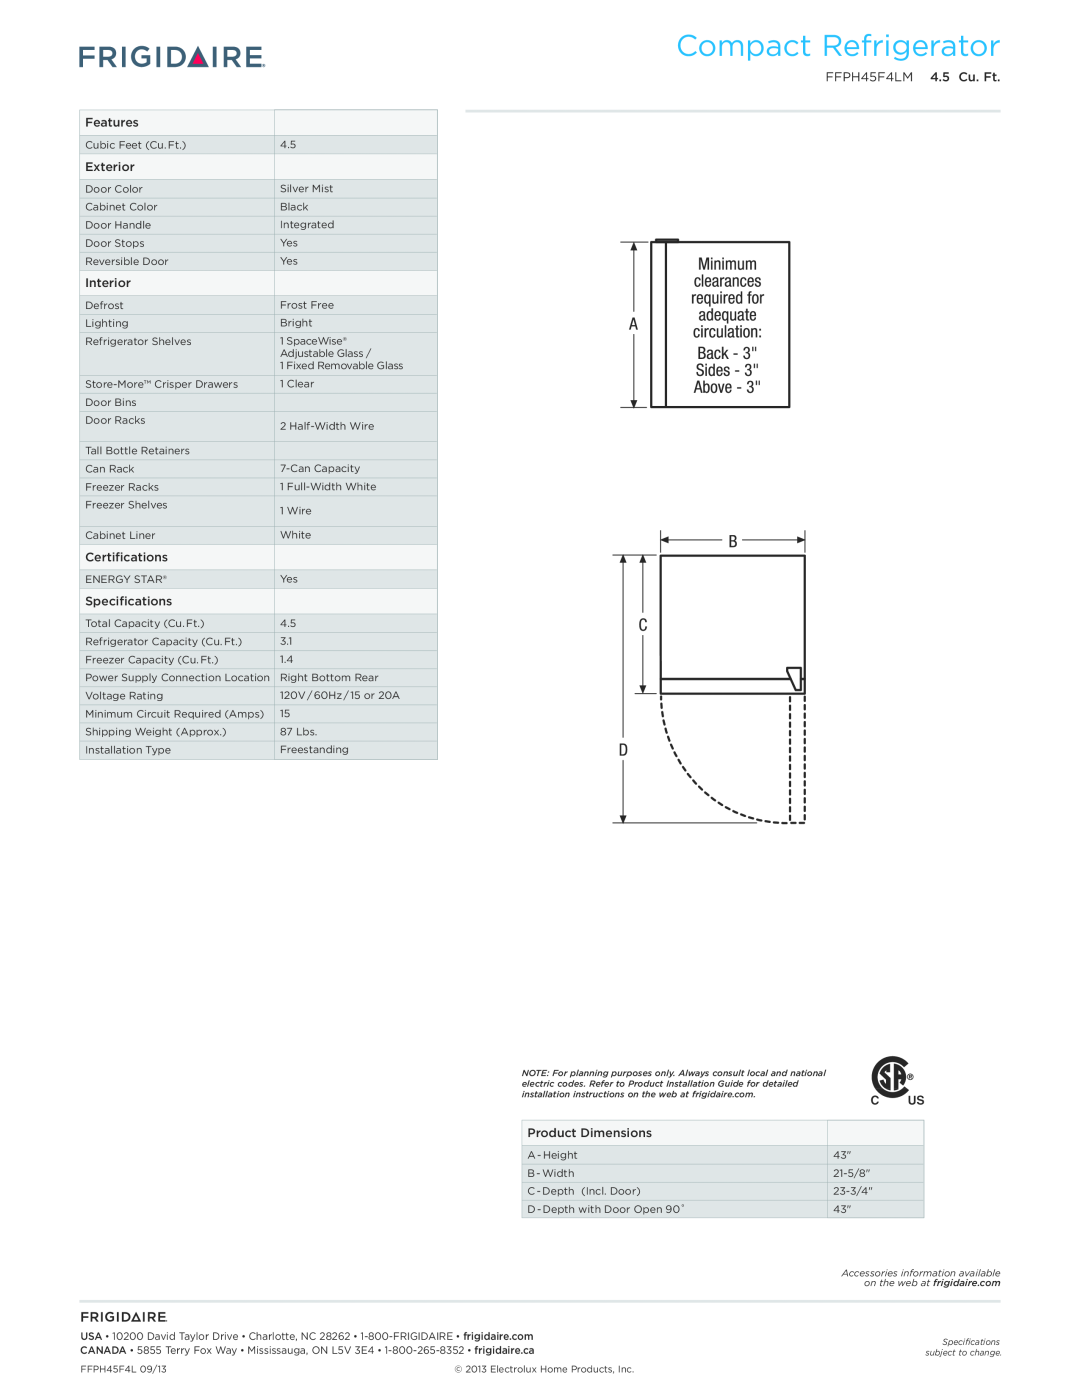 Frigidaire dimensions Compact Refrigerator, FFPH45F4LM 4.5 Cu. Ft 